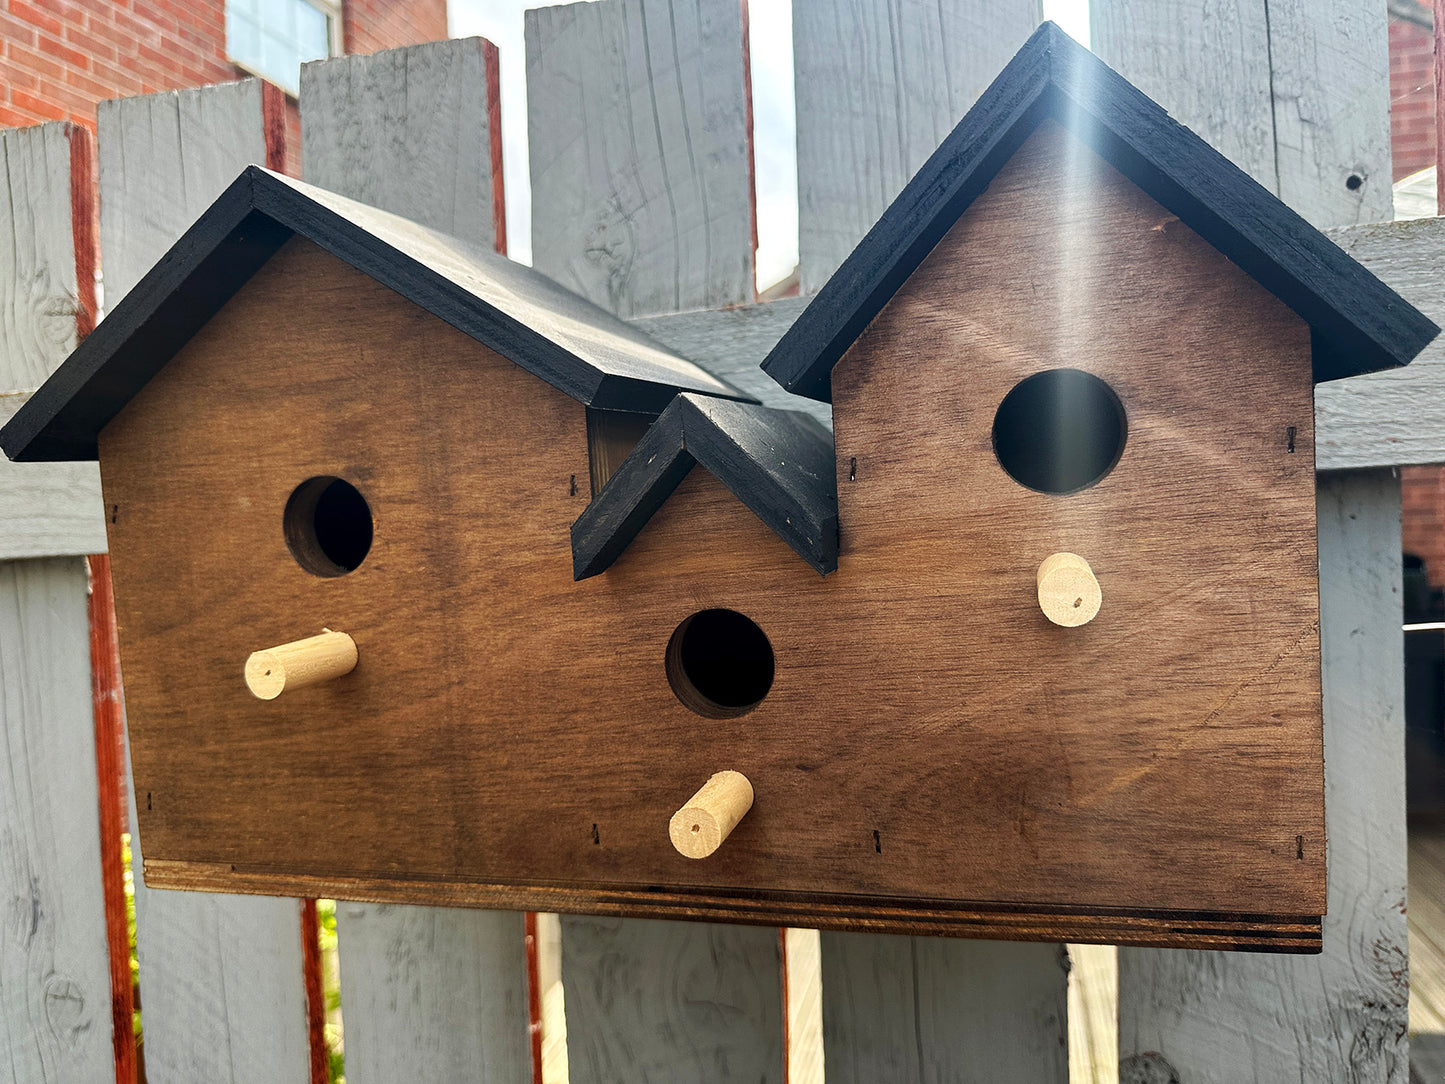 Wooden bird box, bird nesting box, garden bird box, bird house, bird box for garden, bird gift, bird lovers, bird watching gift, garden bird